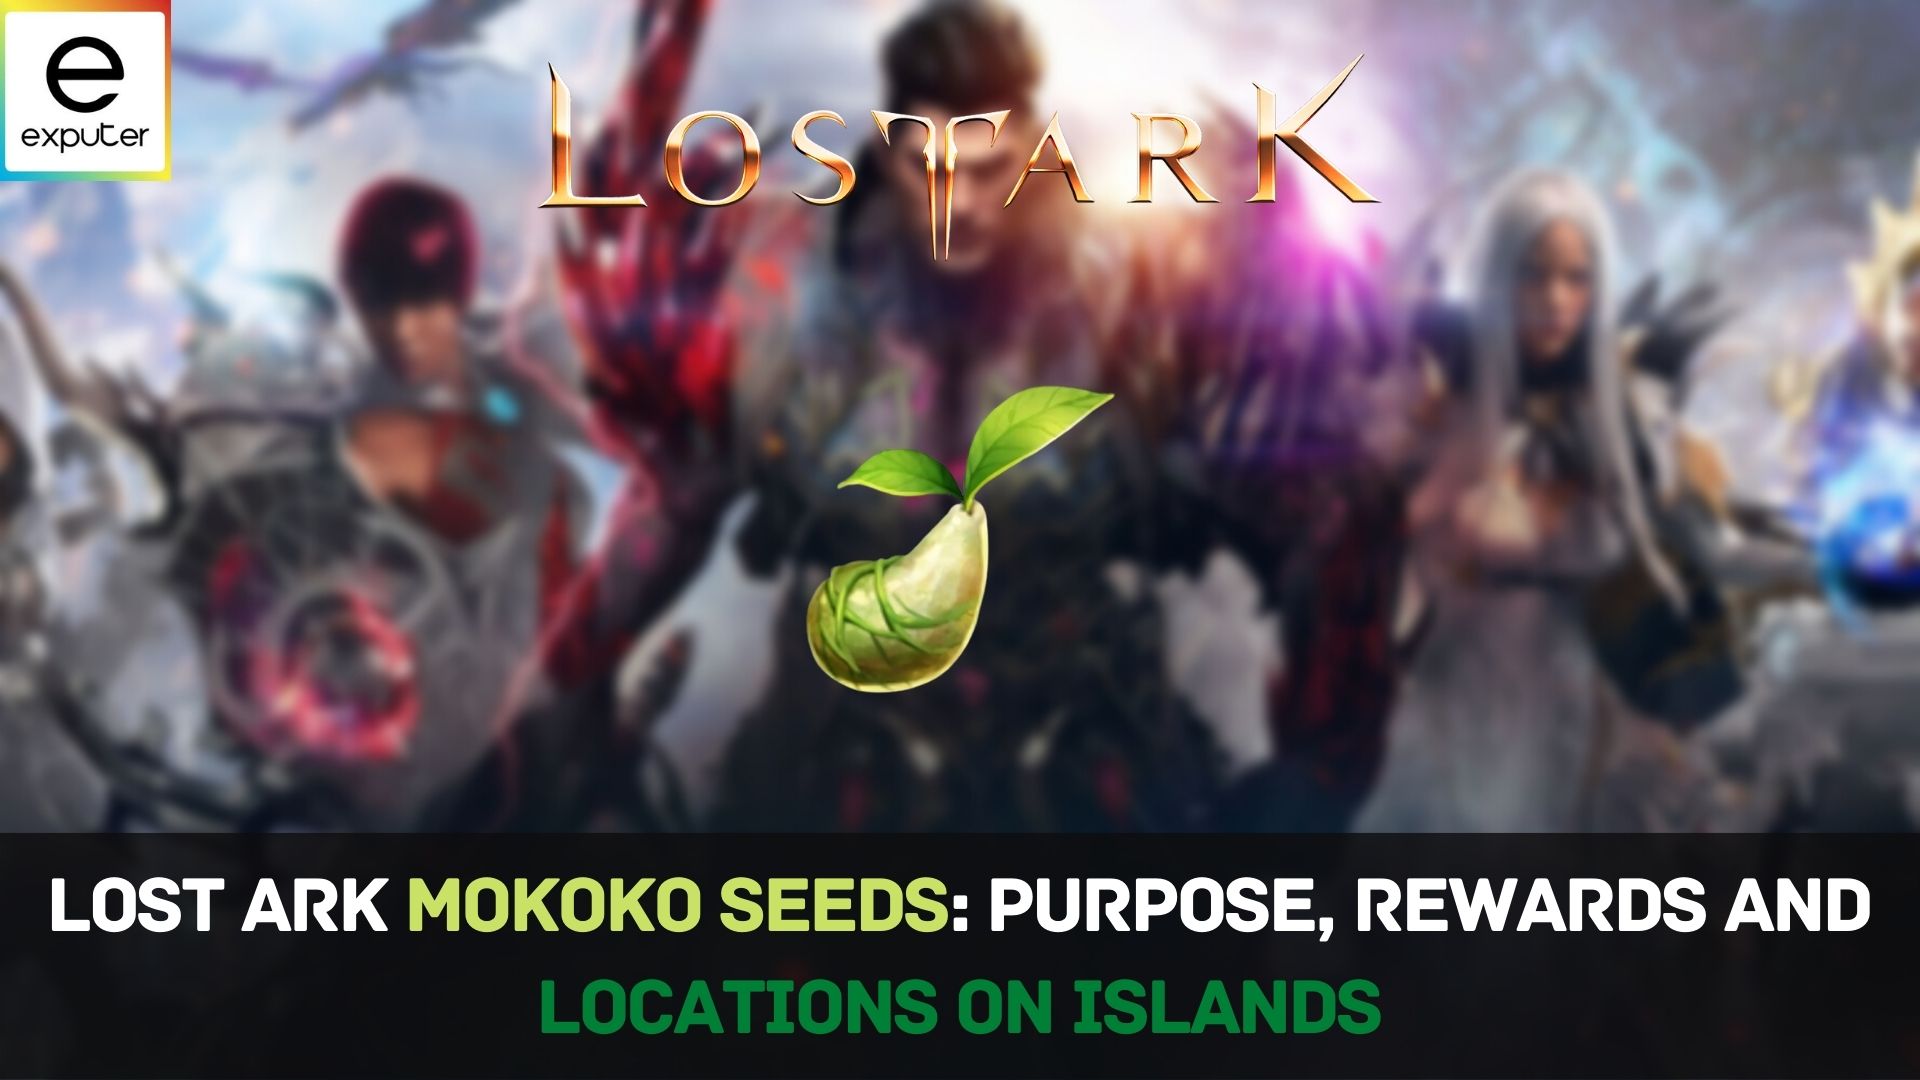 Lost Ark Mokoko Seeds: Island Locations & Rewards - eXputer.com